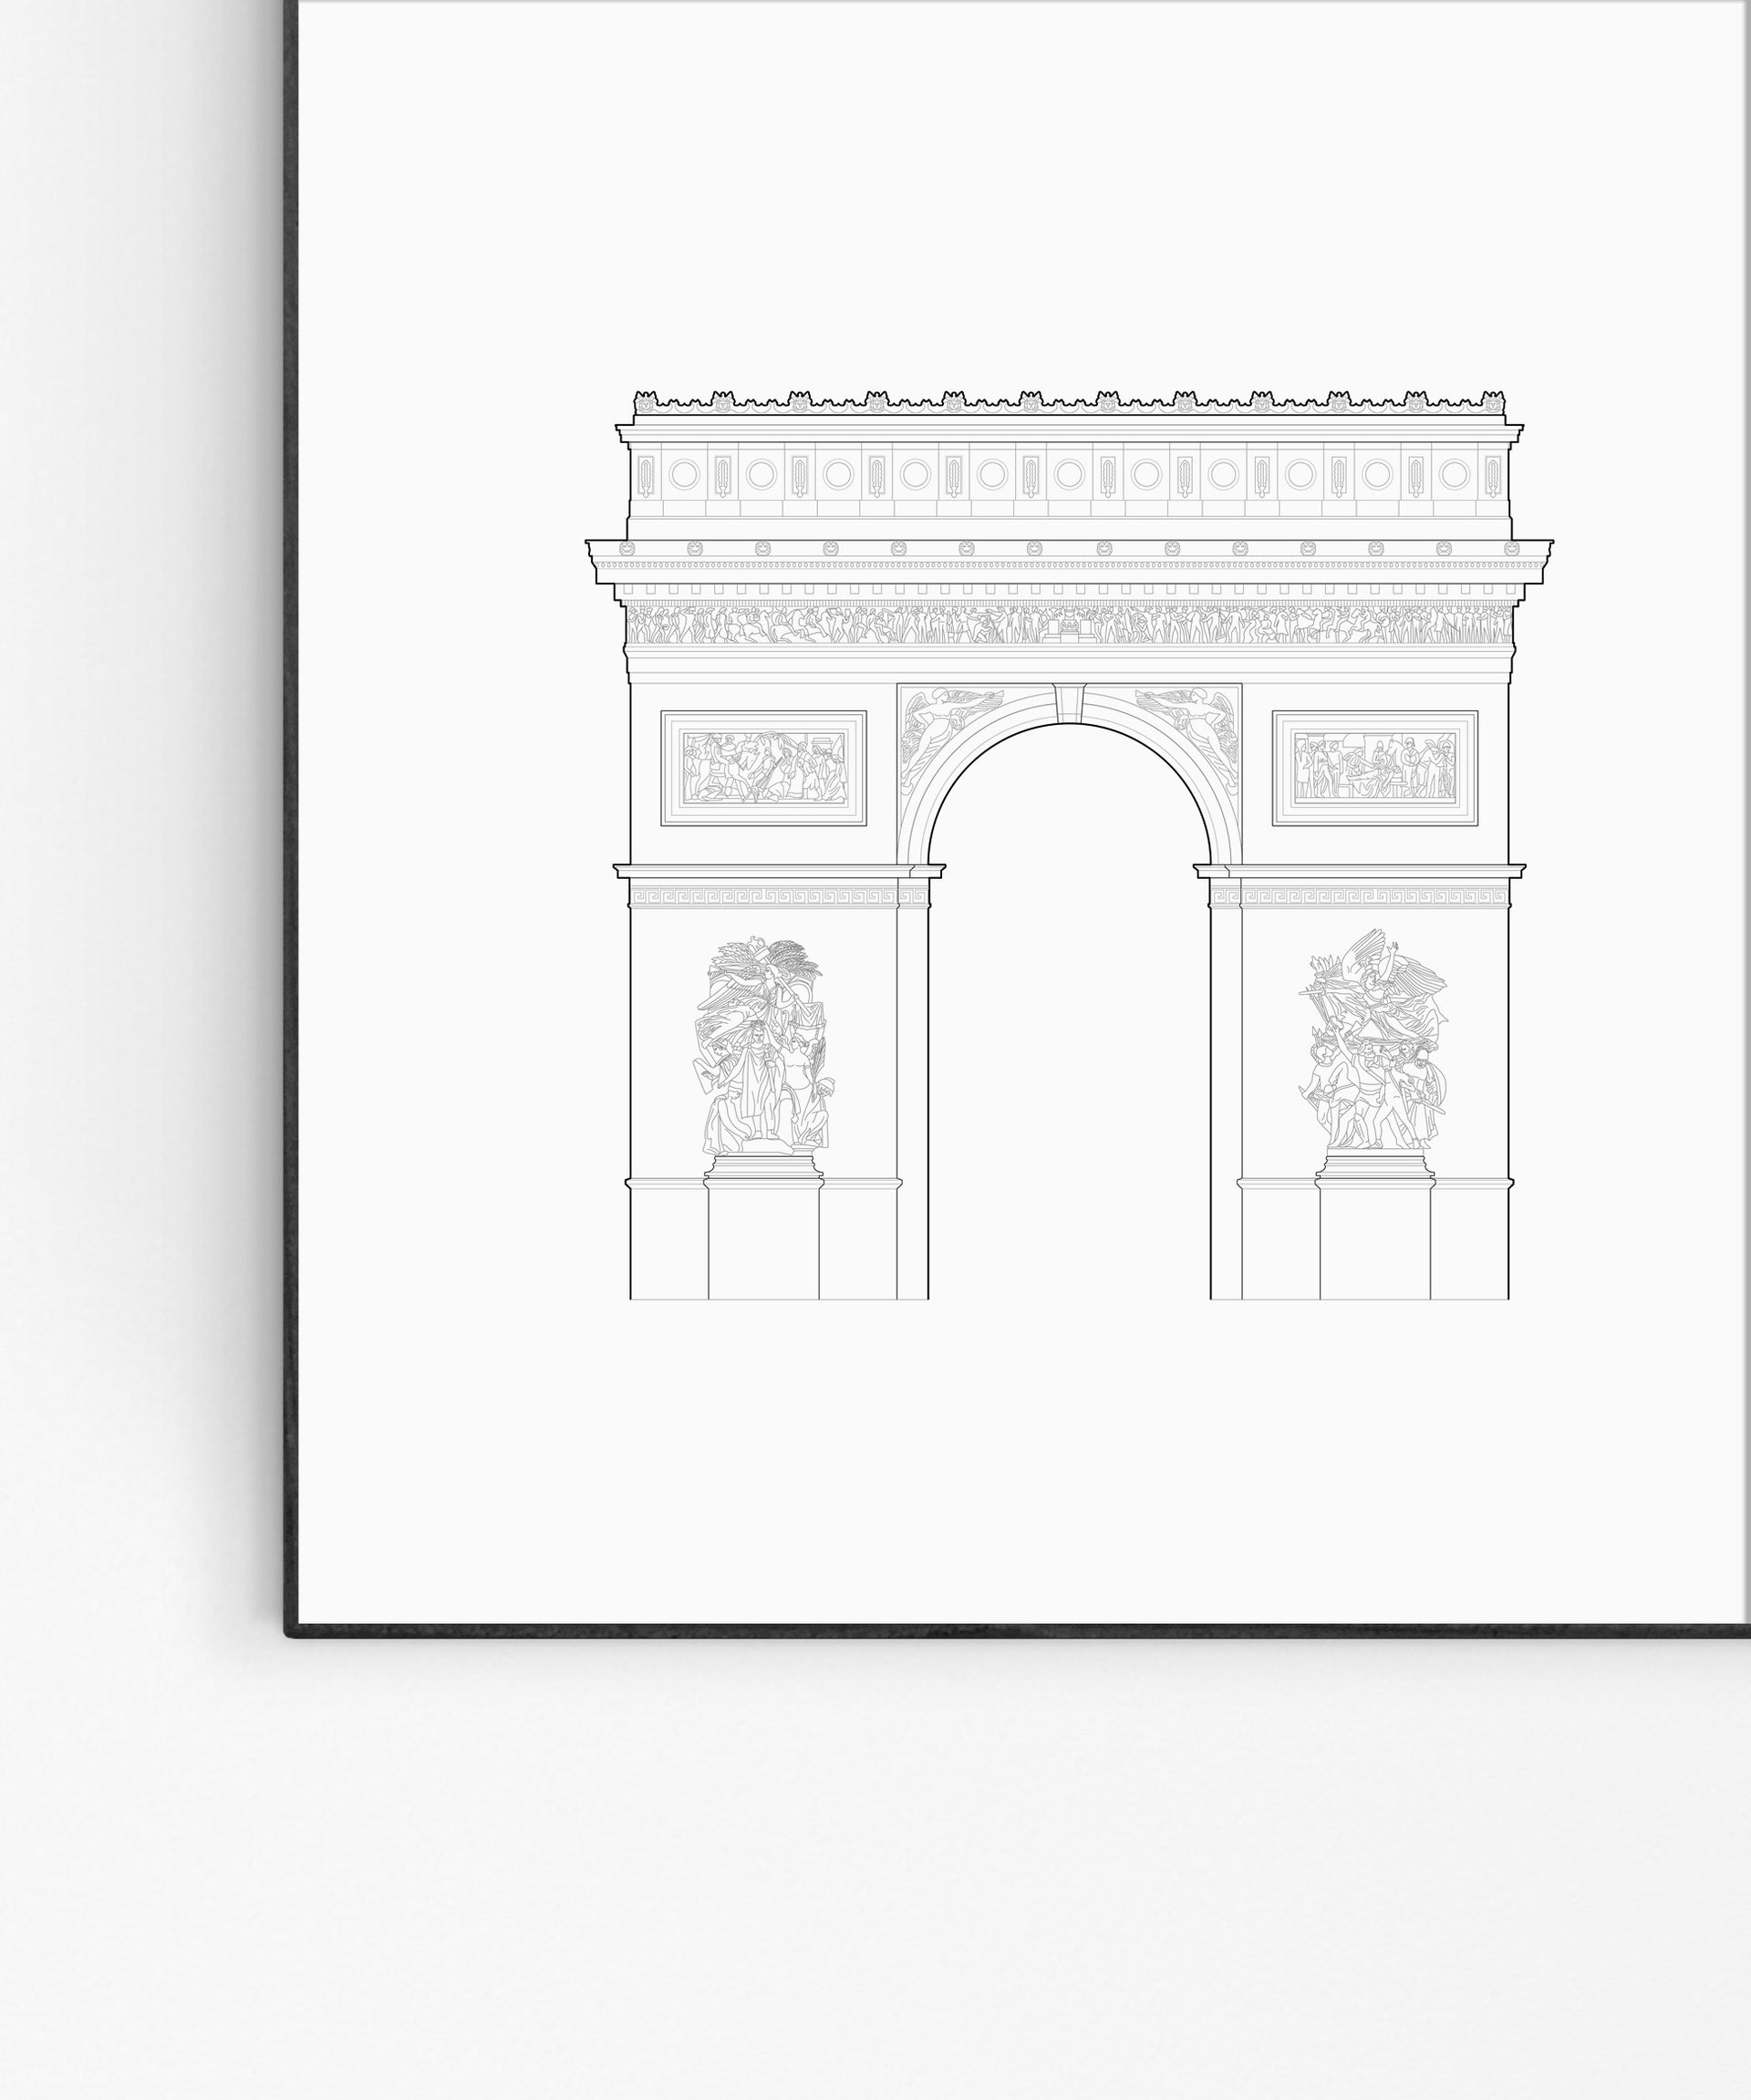 Arc de Triomphe elevation